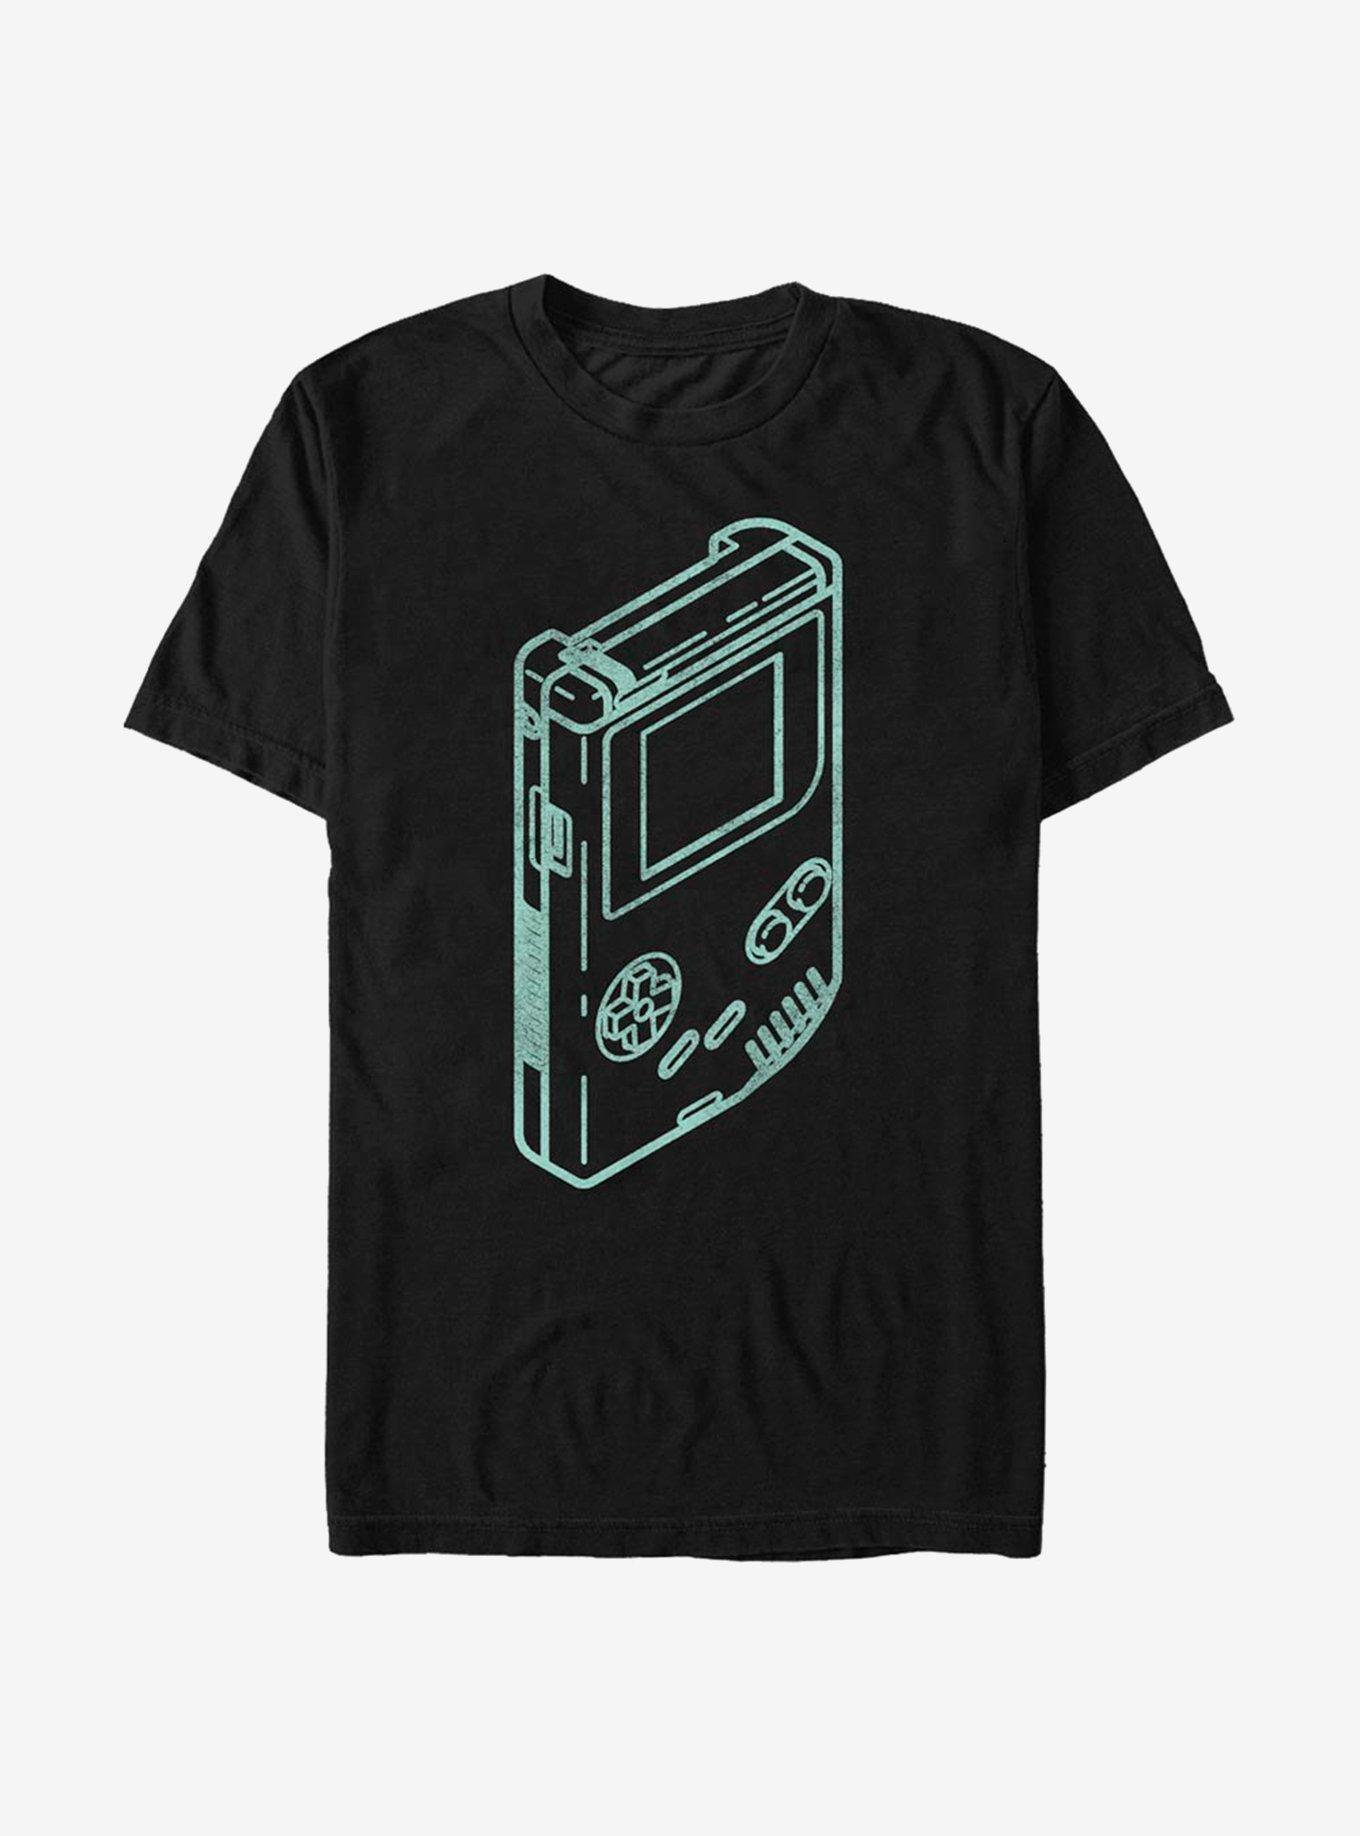 Nintendo Gamer T-Shirt